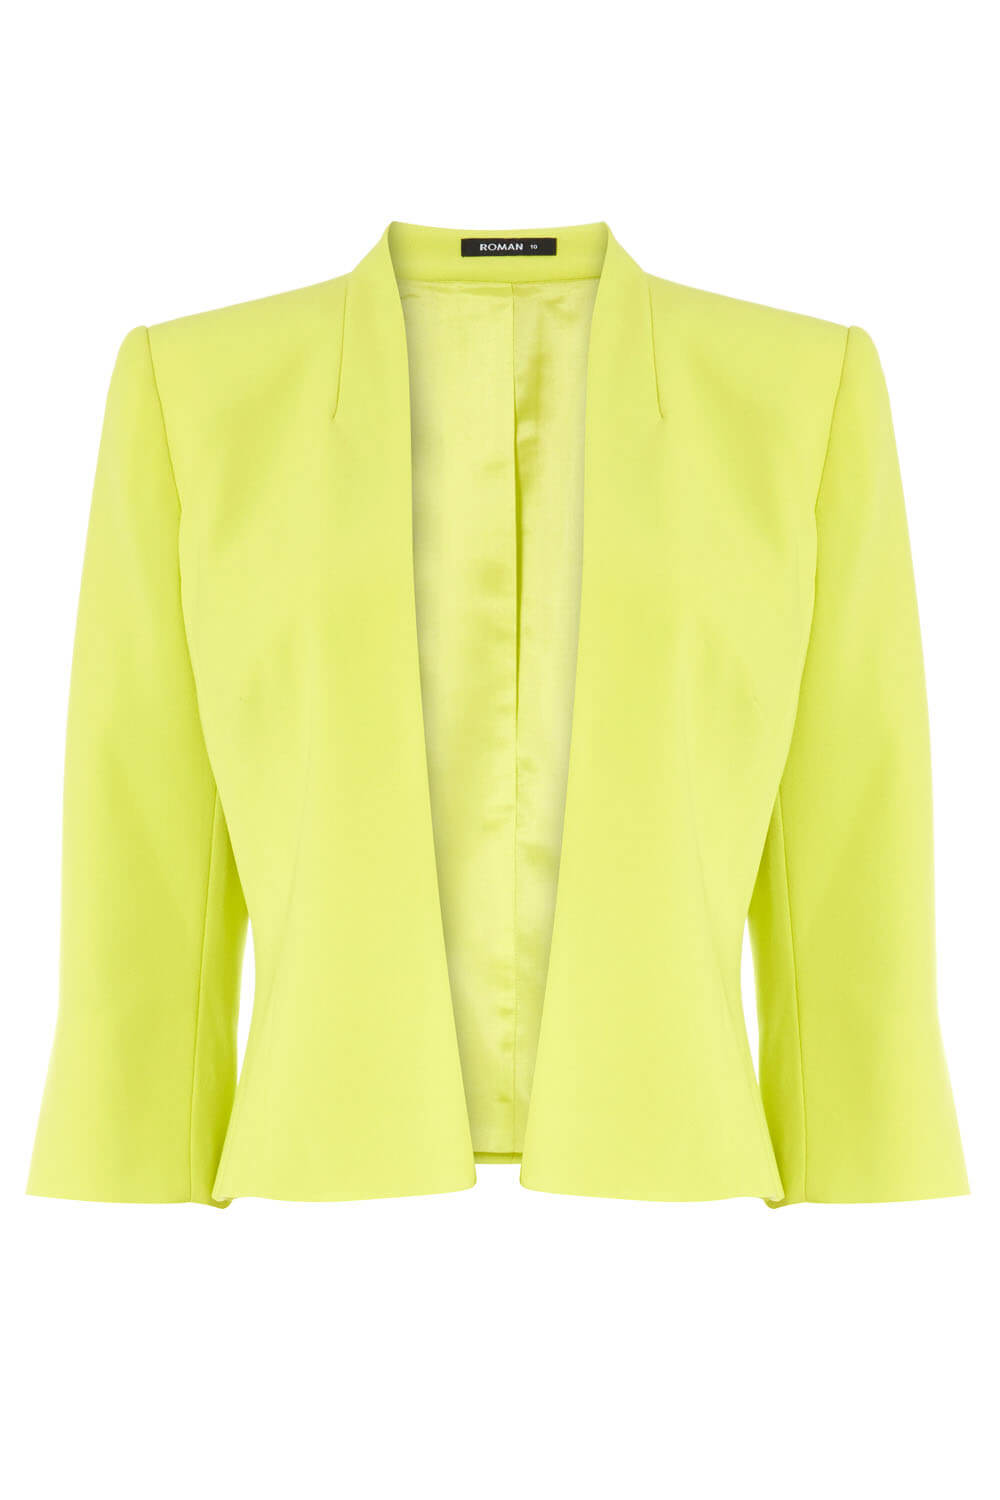 Lime 3/4 Sleeve Rochette Jacket, Image 5 of 5